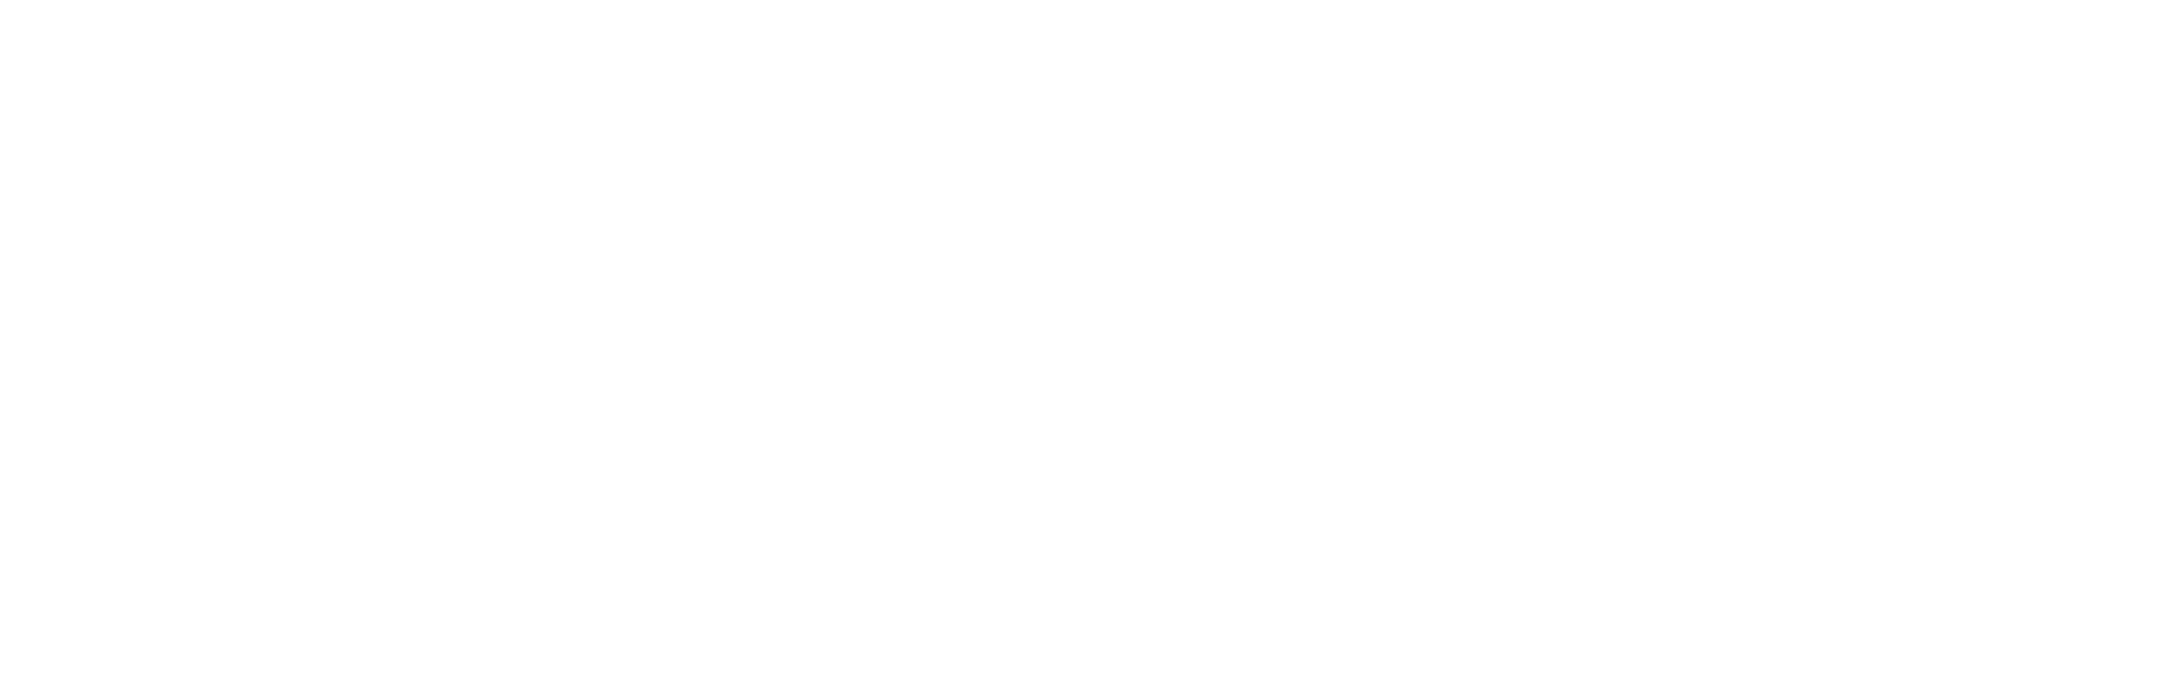 F5 Group